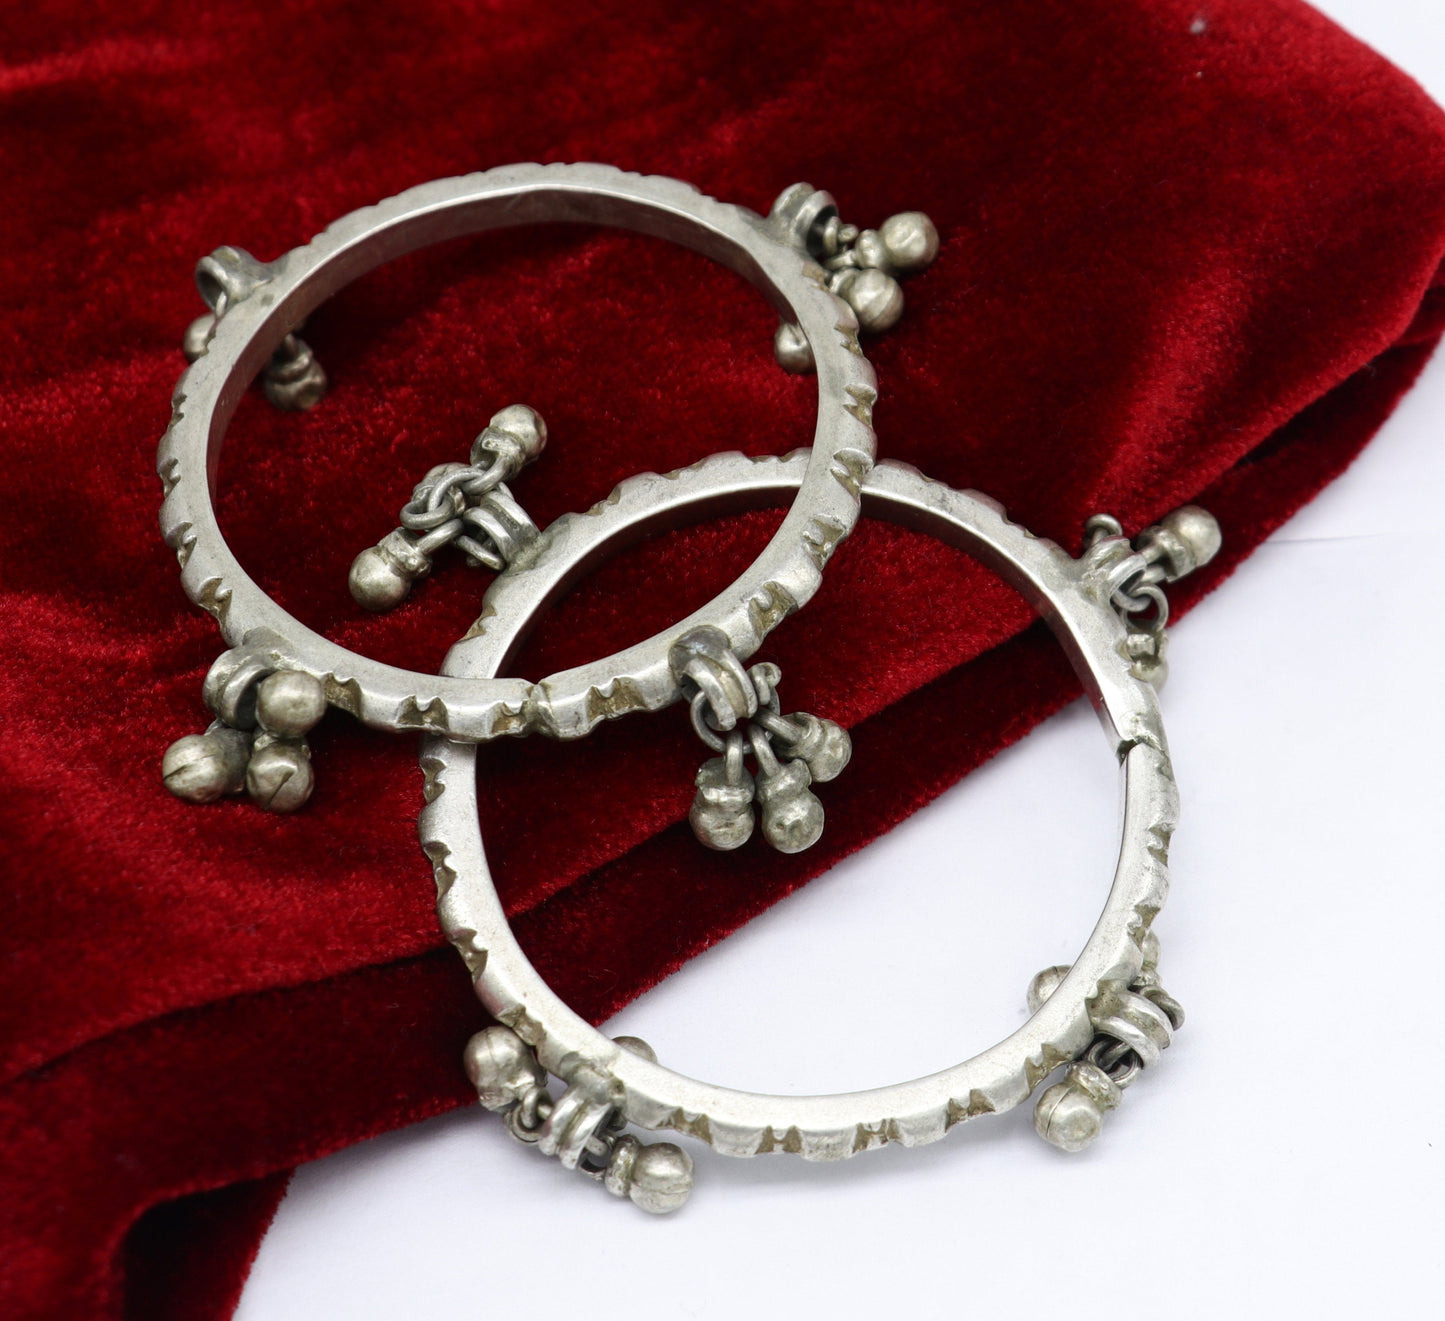 Solid silver handmade vintage antique traditional banjara bangle bracelet with jingling bells, indian ethnic tribal bangles for girl's sba23 - TRIBAL ORNAMENTS